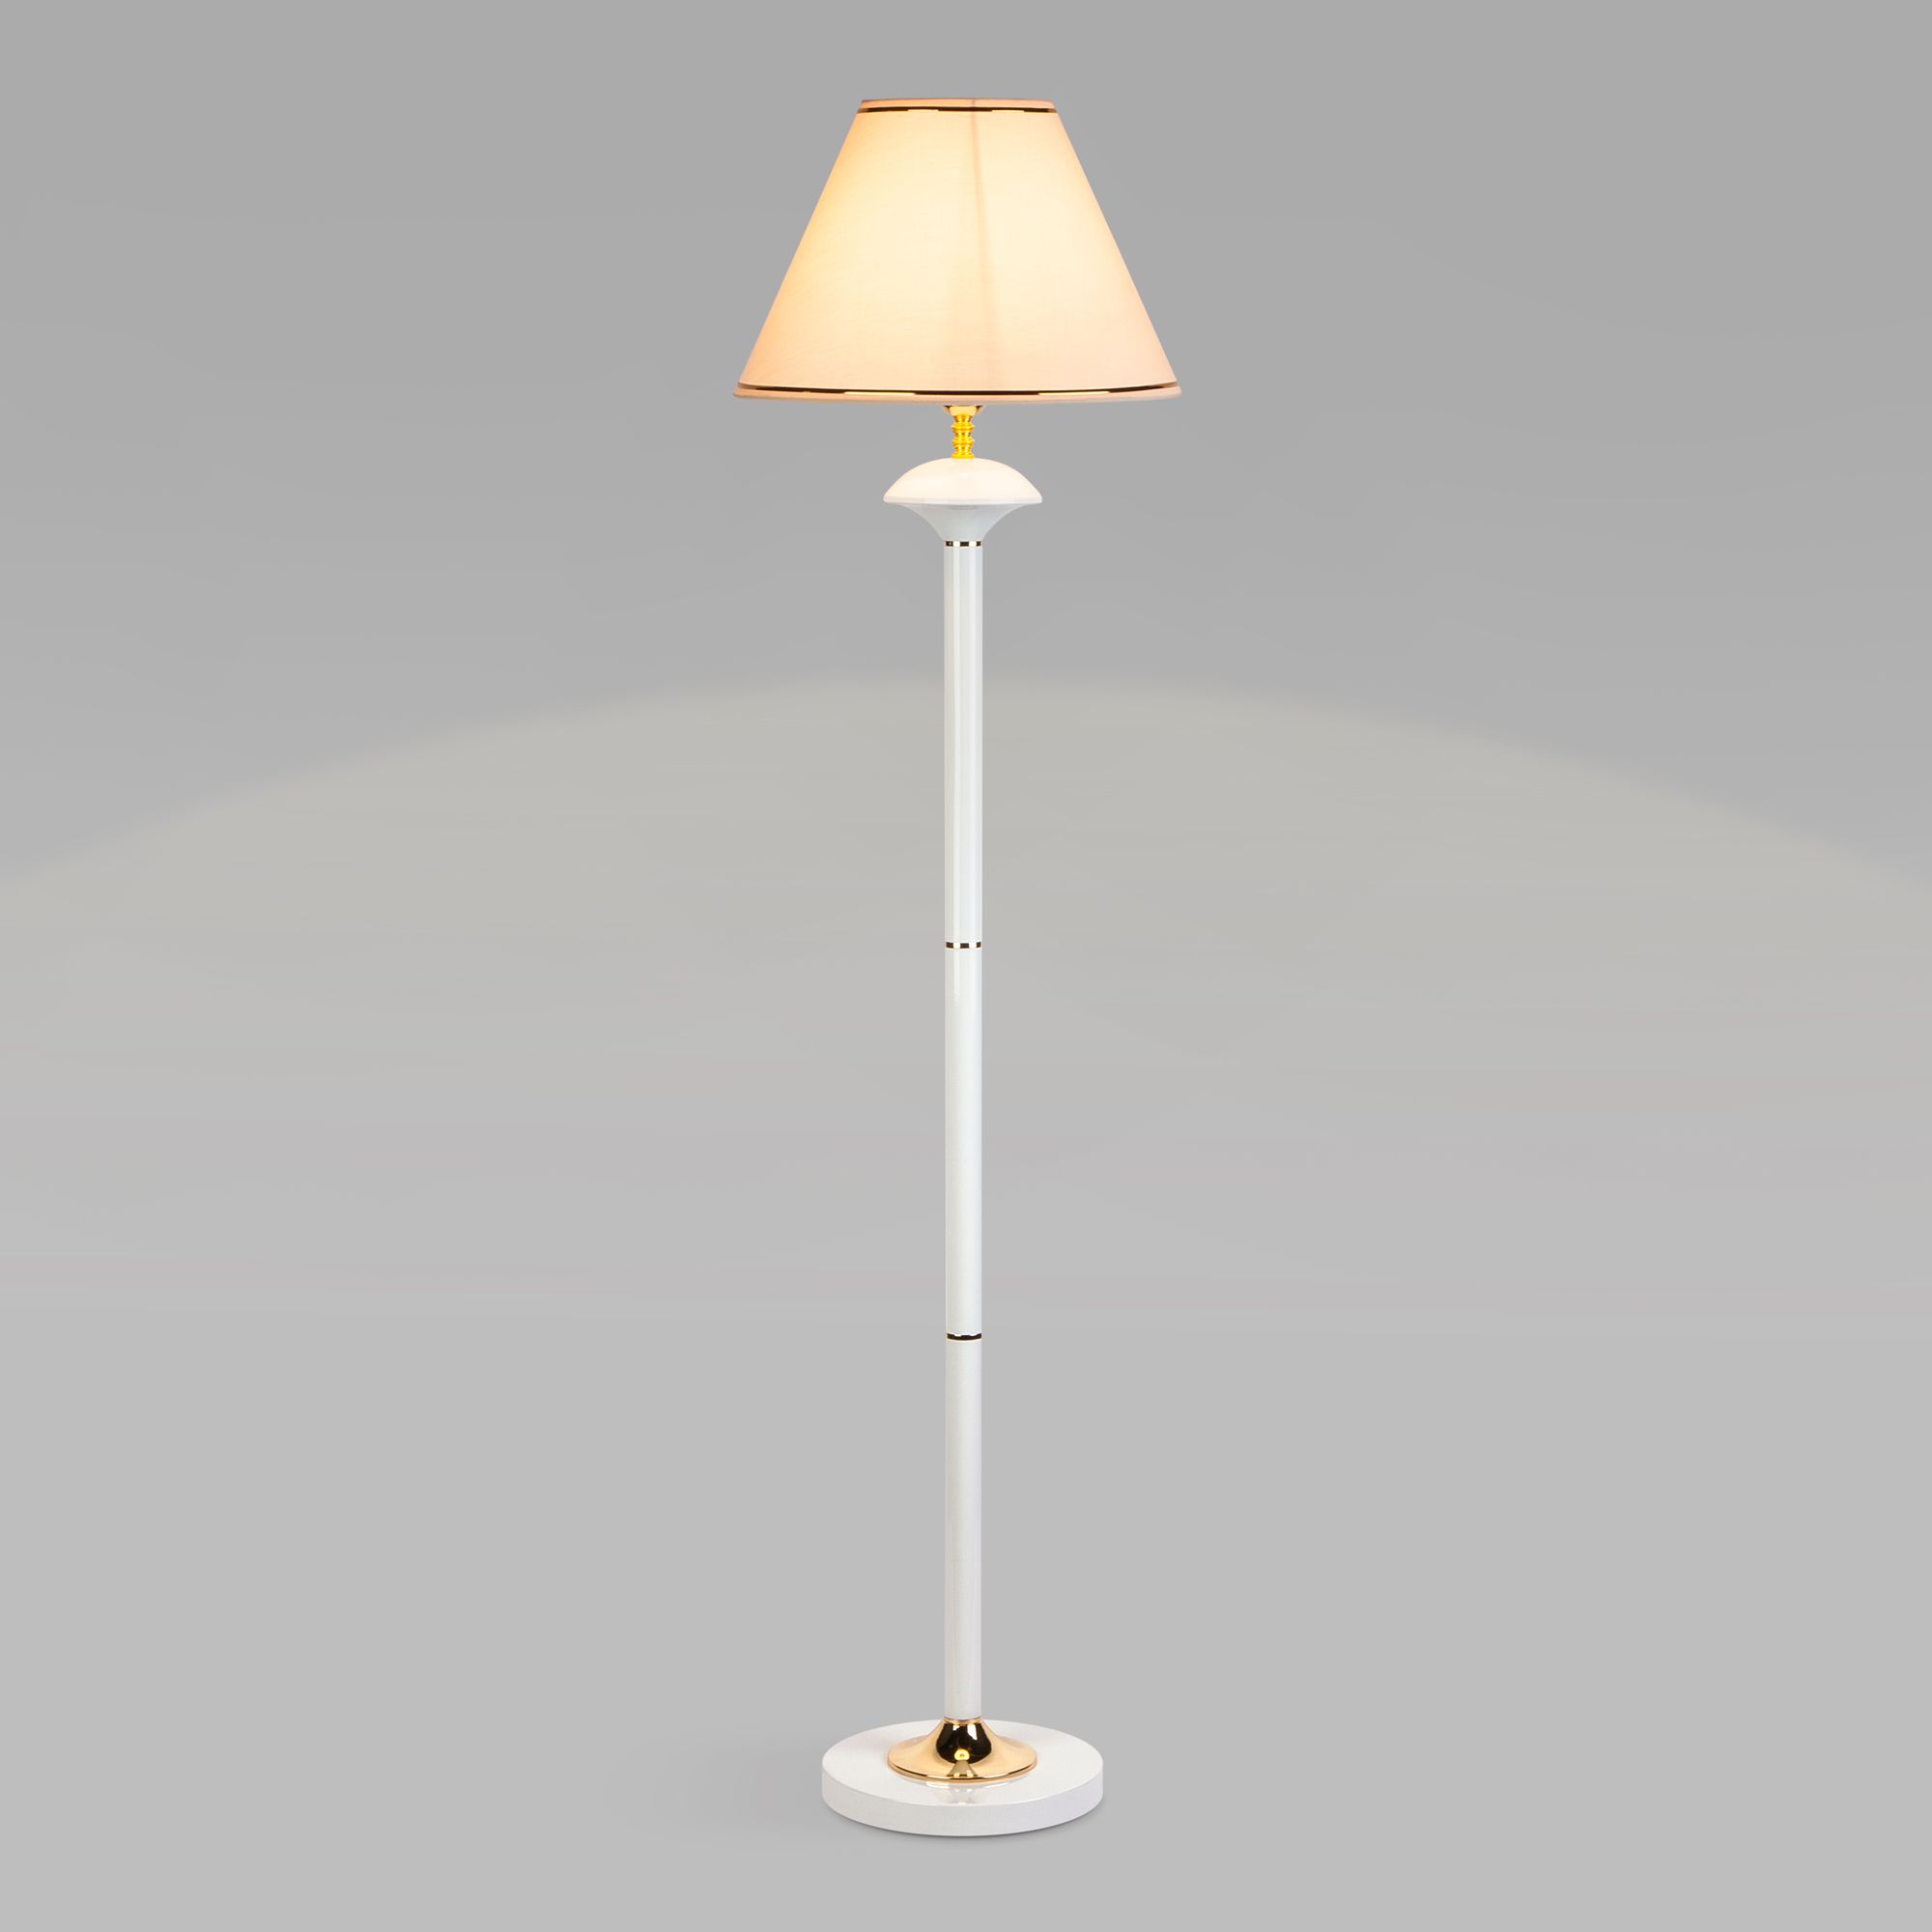 Напольный светильник с абажуром Eurosvet Lorenzo 01086/1 глянцевый белый. Фото 1